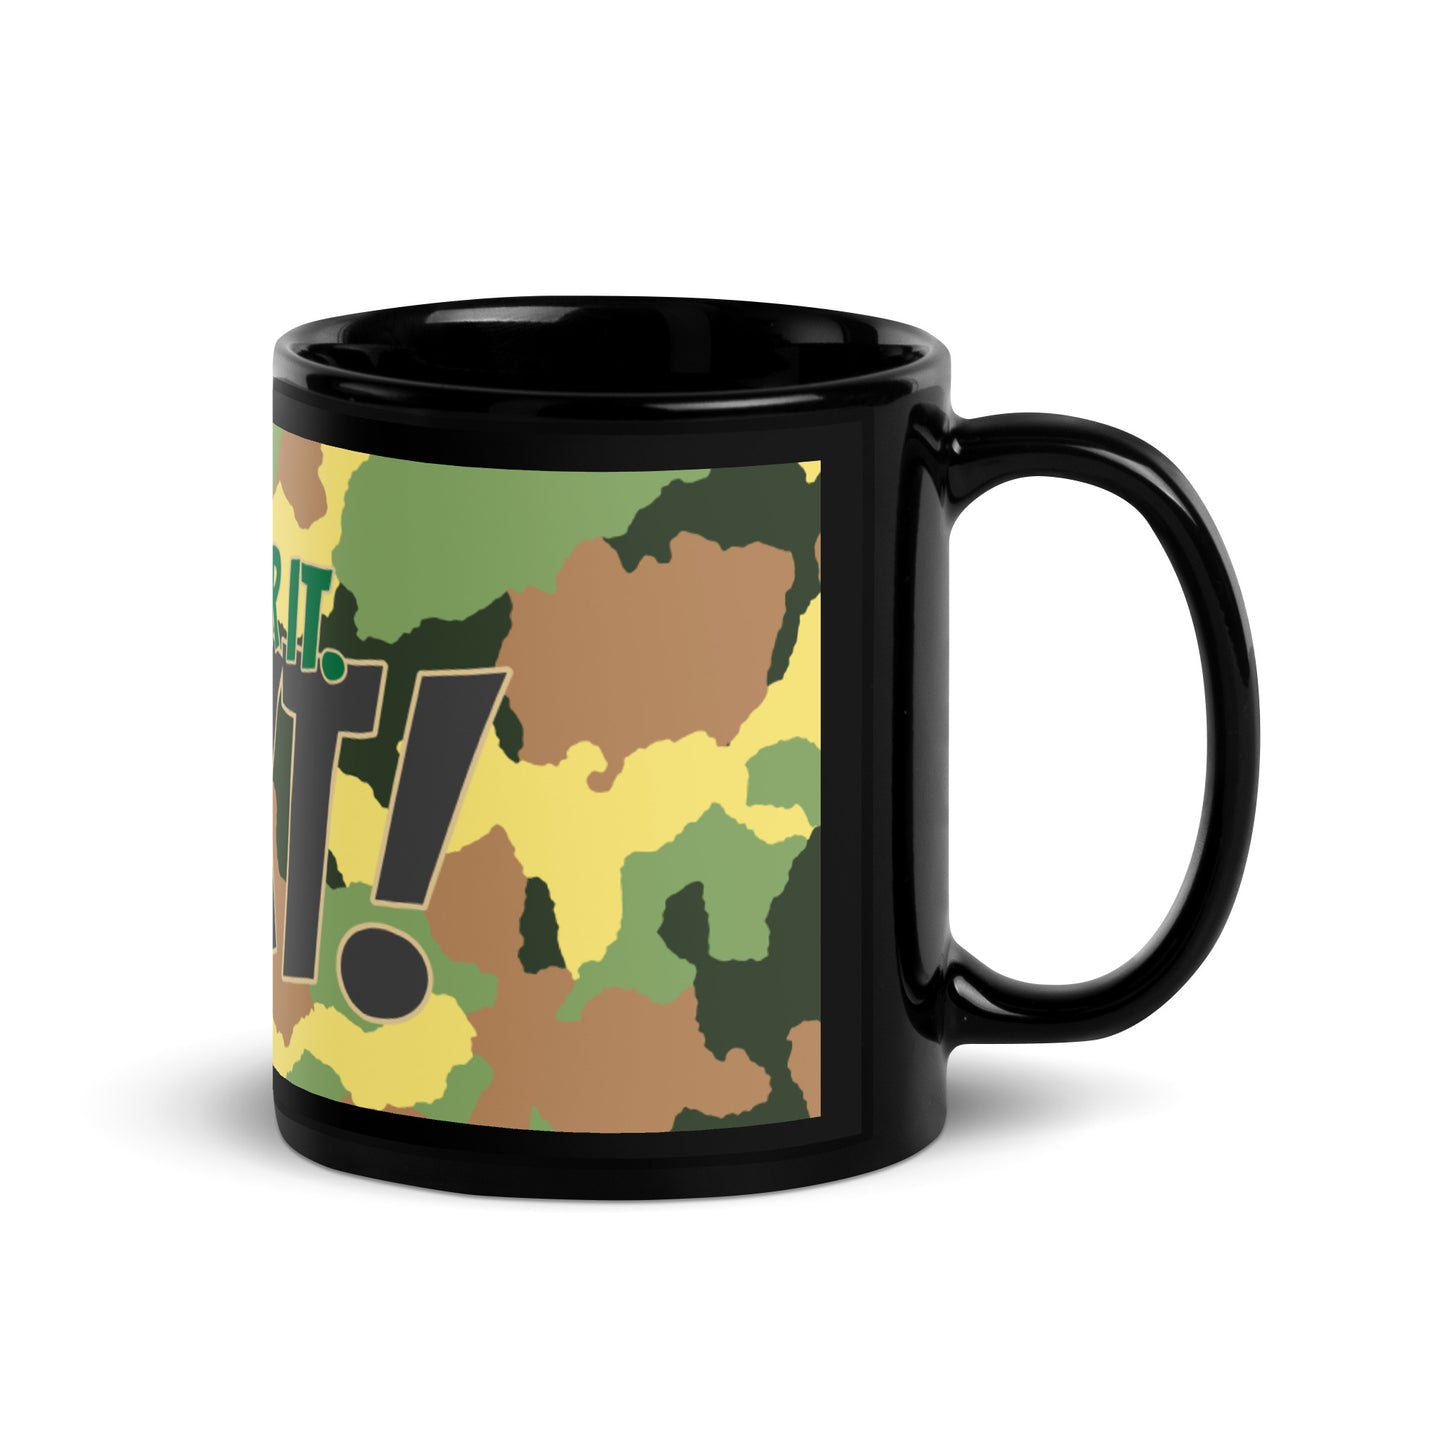 Army Camo Black Glossy Mug - I'm over it. Next!